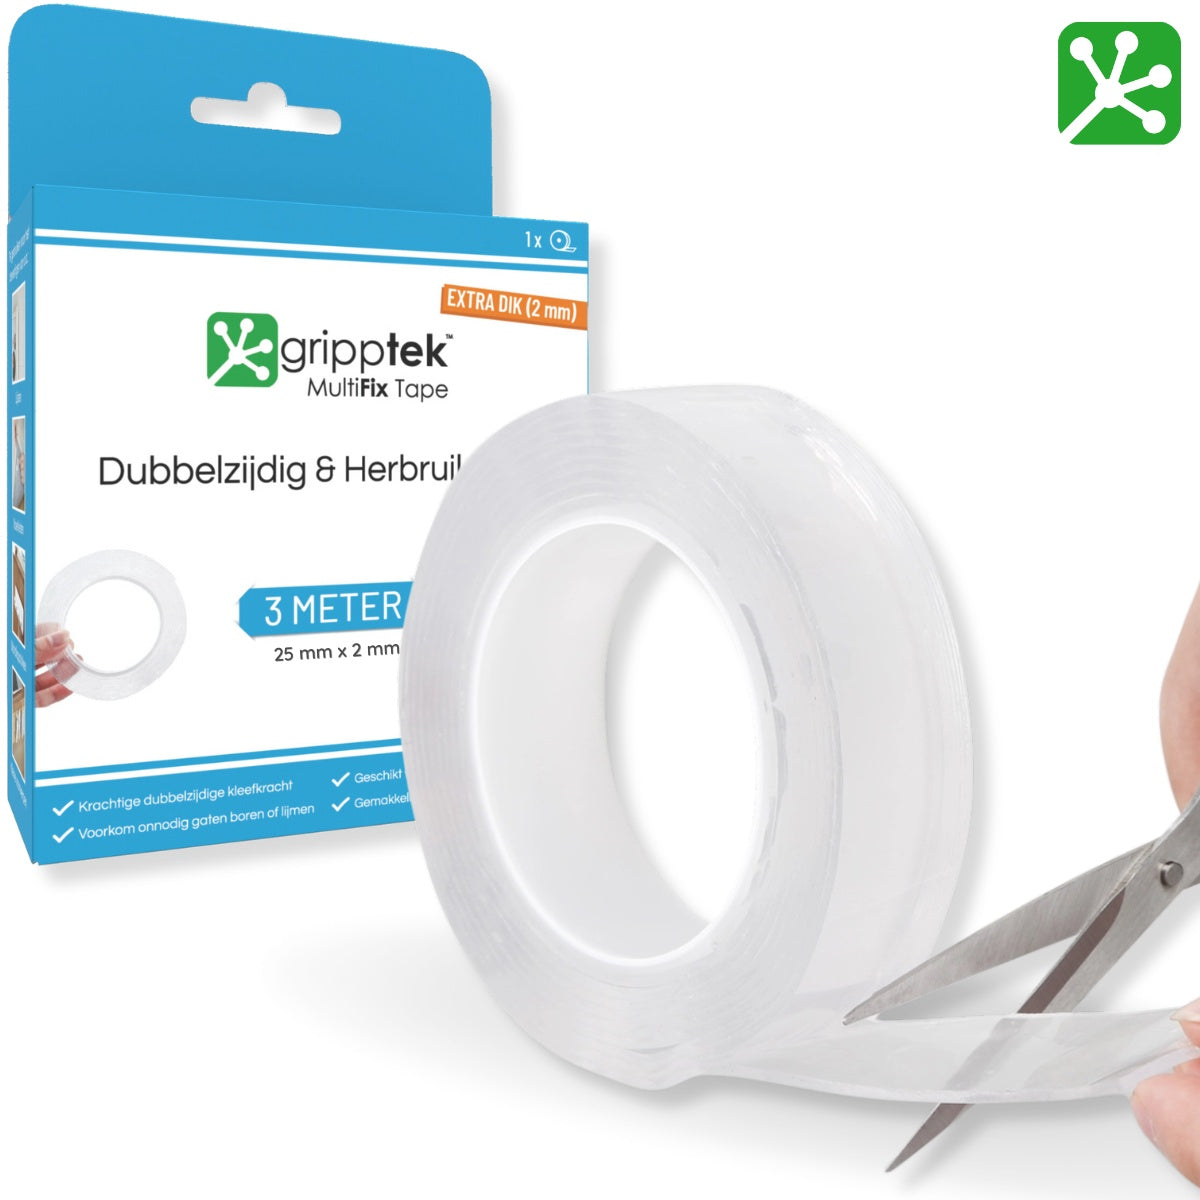 GrippTek® MultiFix Tape Original 2.0 | Dubbelzijdig & Herbruikbaar - GrippTek